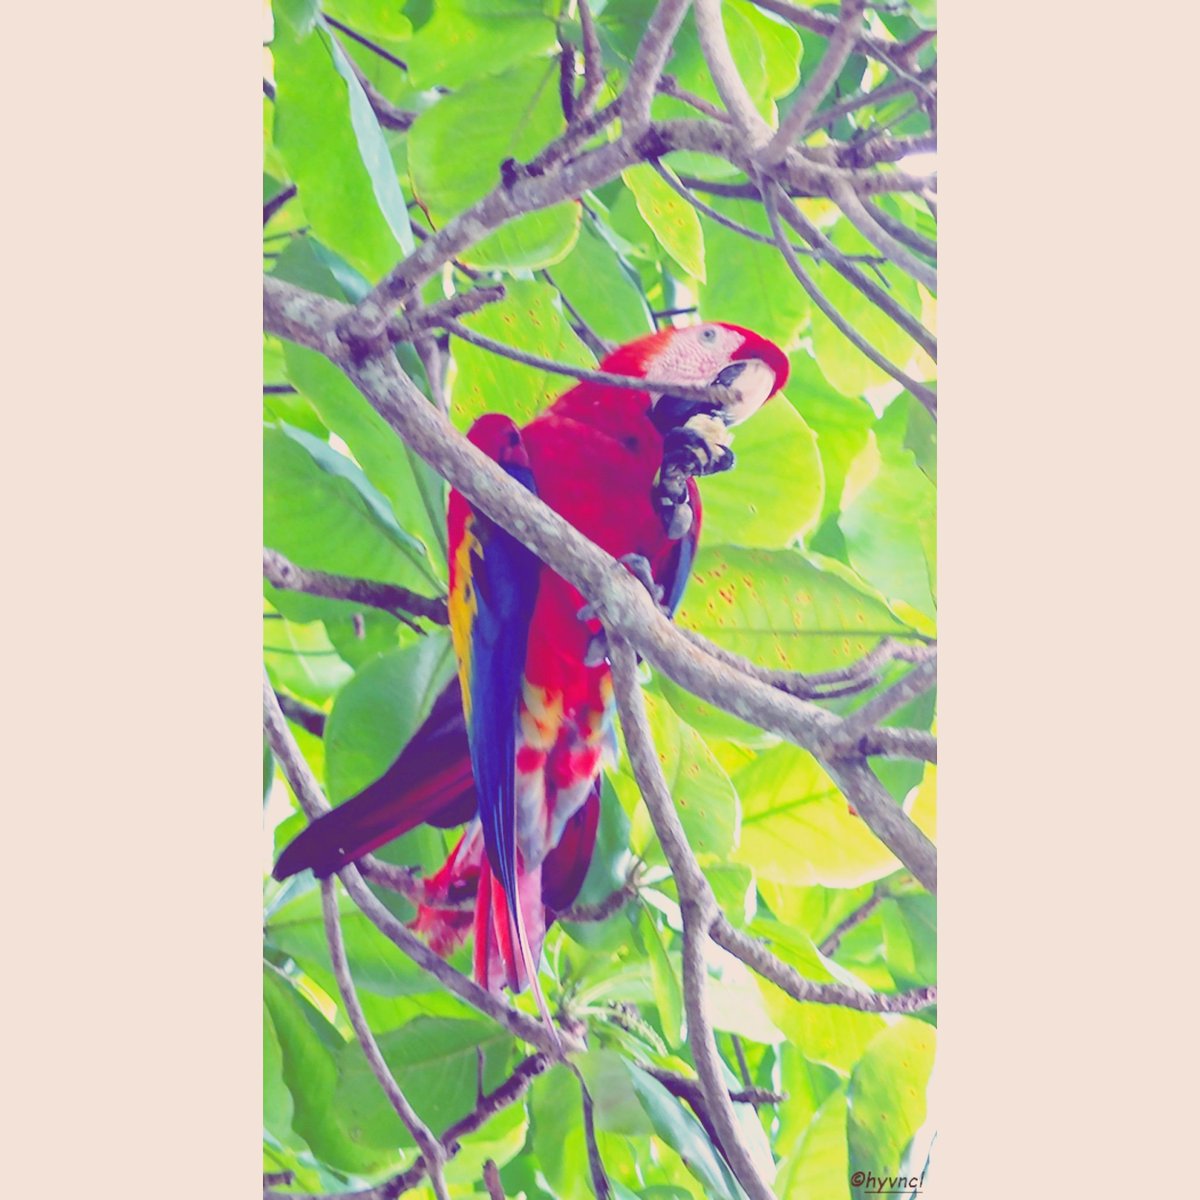 macaulaylibrary.org/asset/55507741
#scarletmacaw #aramacao #terminaliacatappa #avesdecostarica #thearaproject #reintroduction #tiskitajunglelodge #neotropics #16x9_birds #birdsoftwitter #birdyourworld #500pxrtg #ThePhotoHour #dailyphoto #PintoFotografía #thePhotoNow #YourShot #trakus